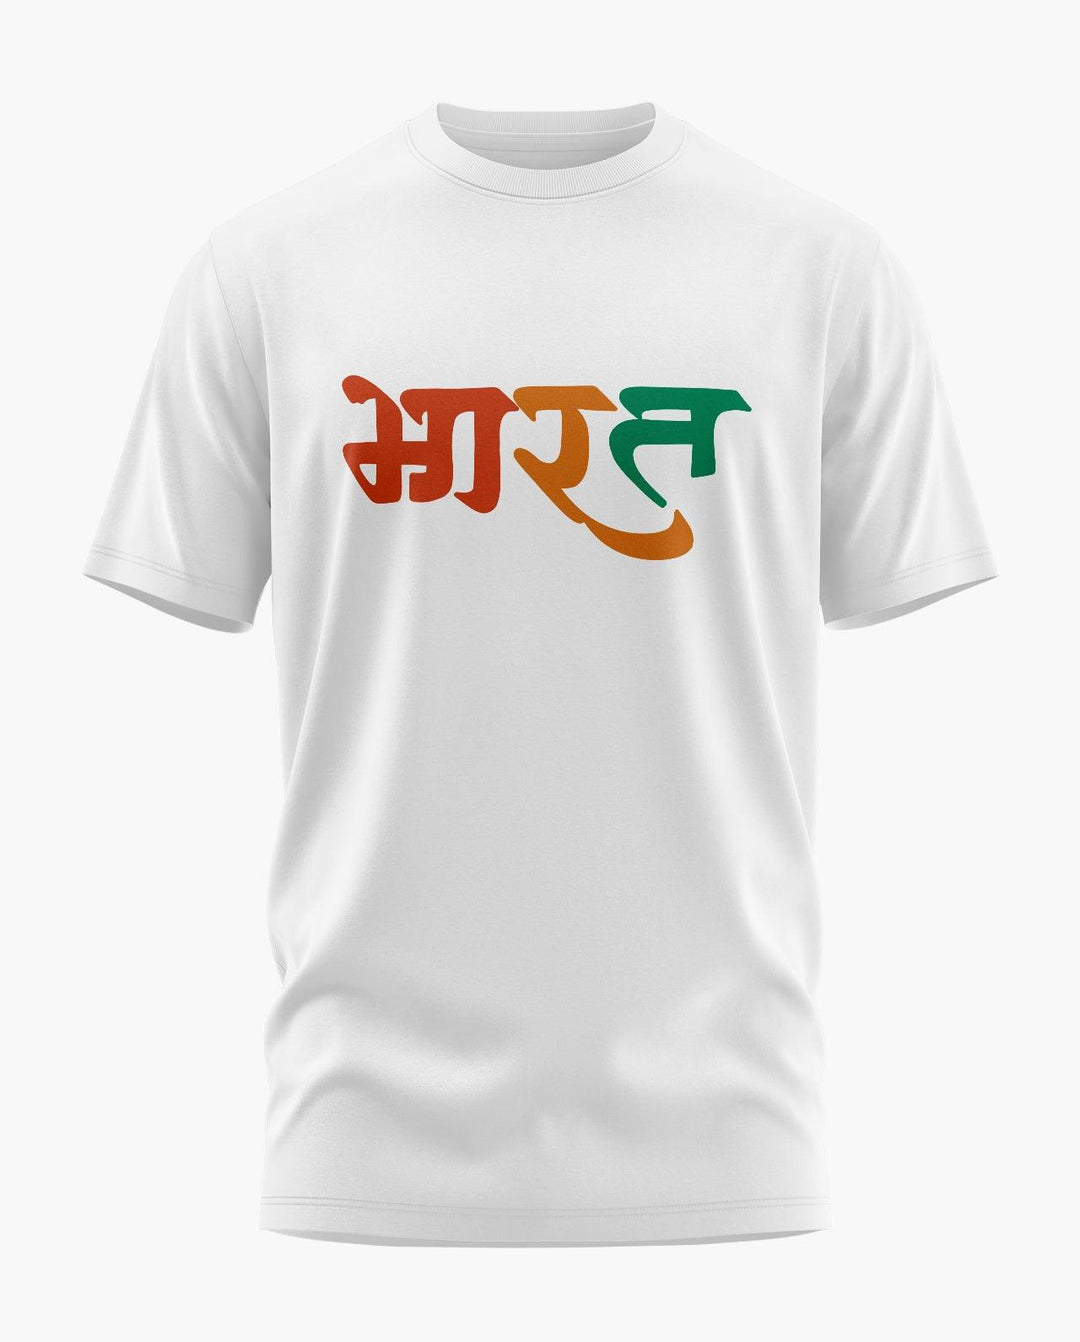 Bharat T-Shirt - Aero Armour